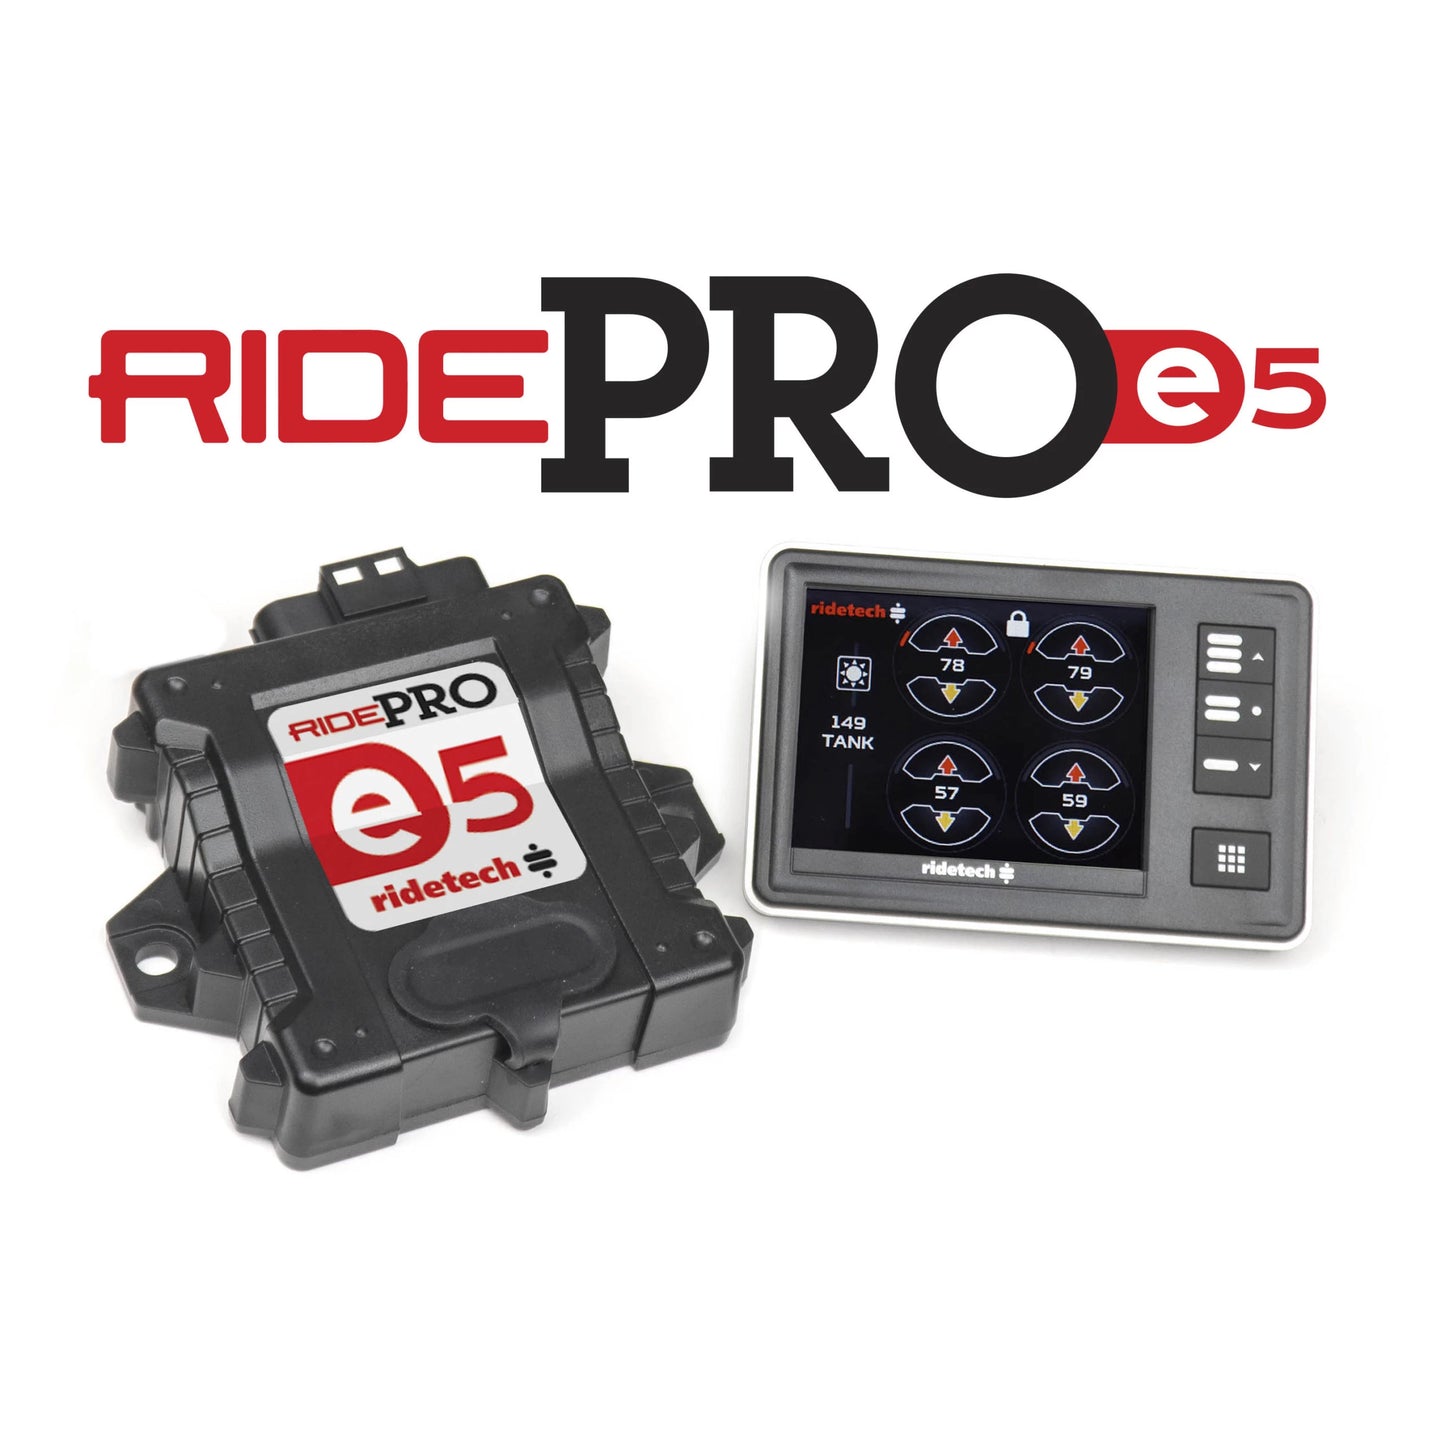 Ridetech RidePro E5 Air Ride Suspension Control System